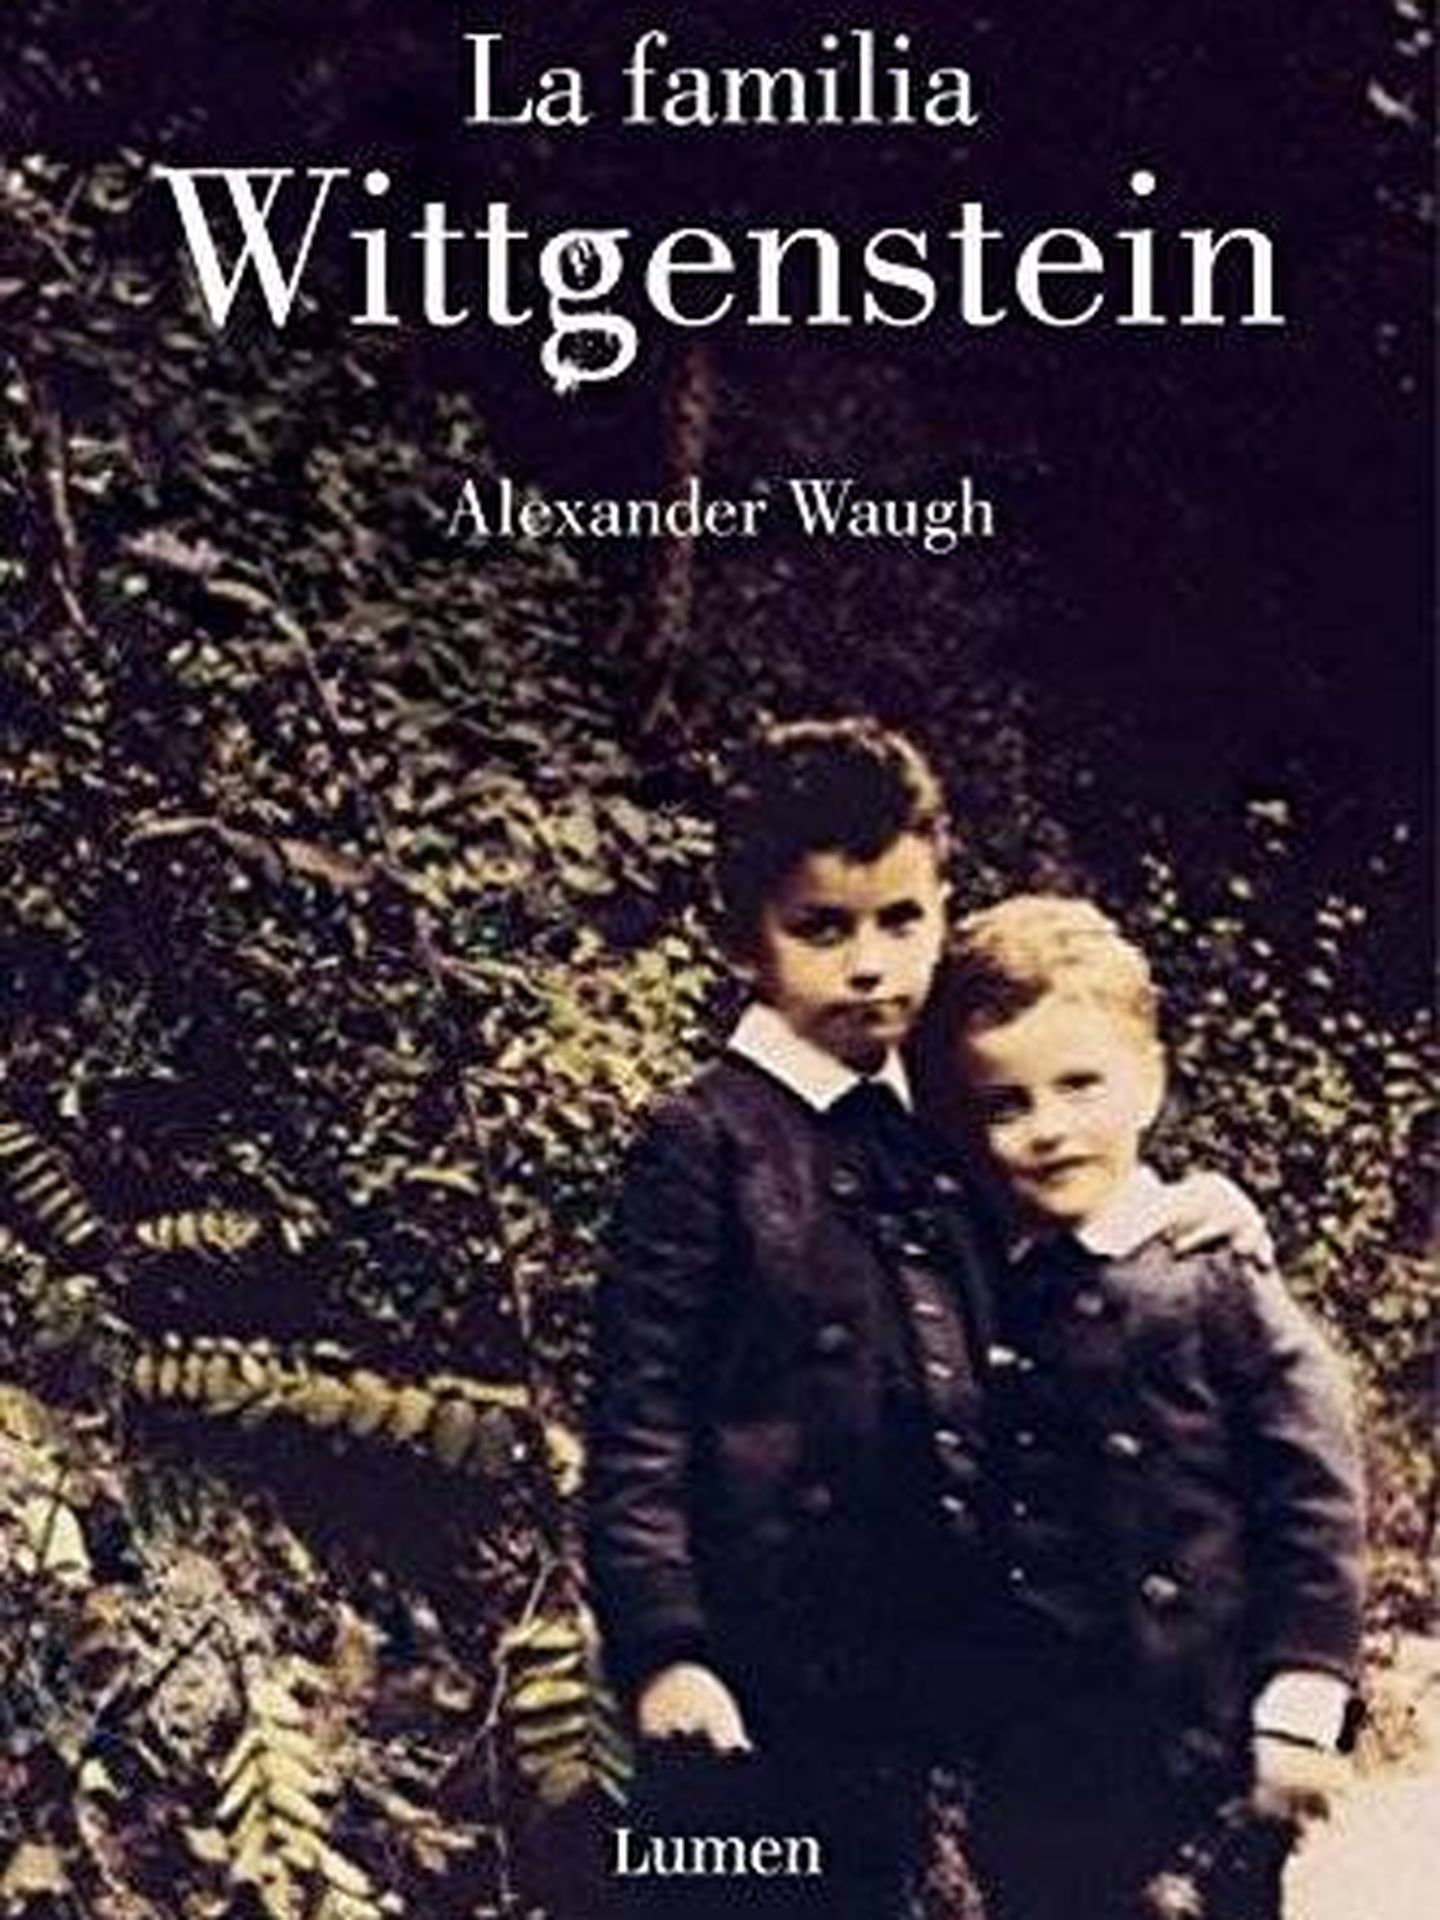 'La familia Wittgenstein'. (Lumen)